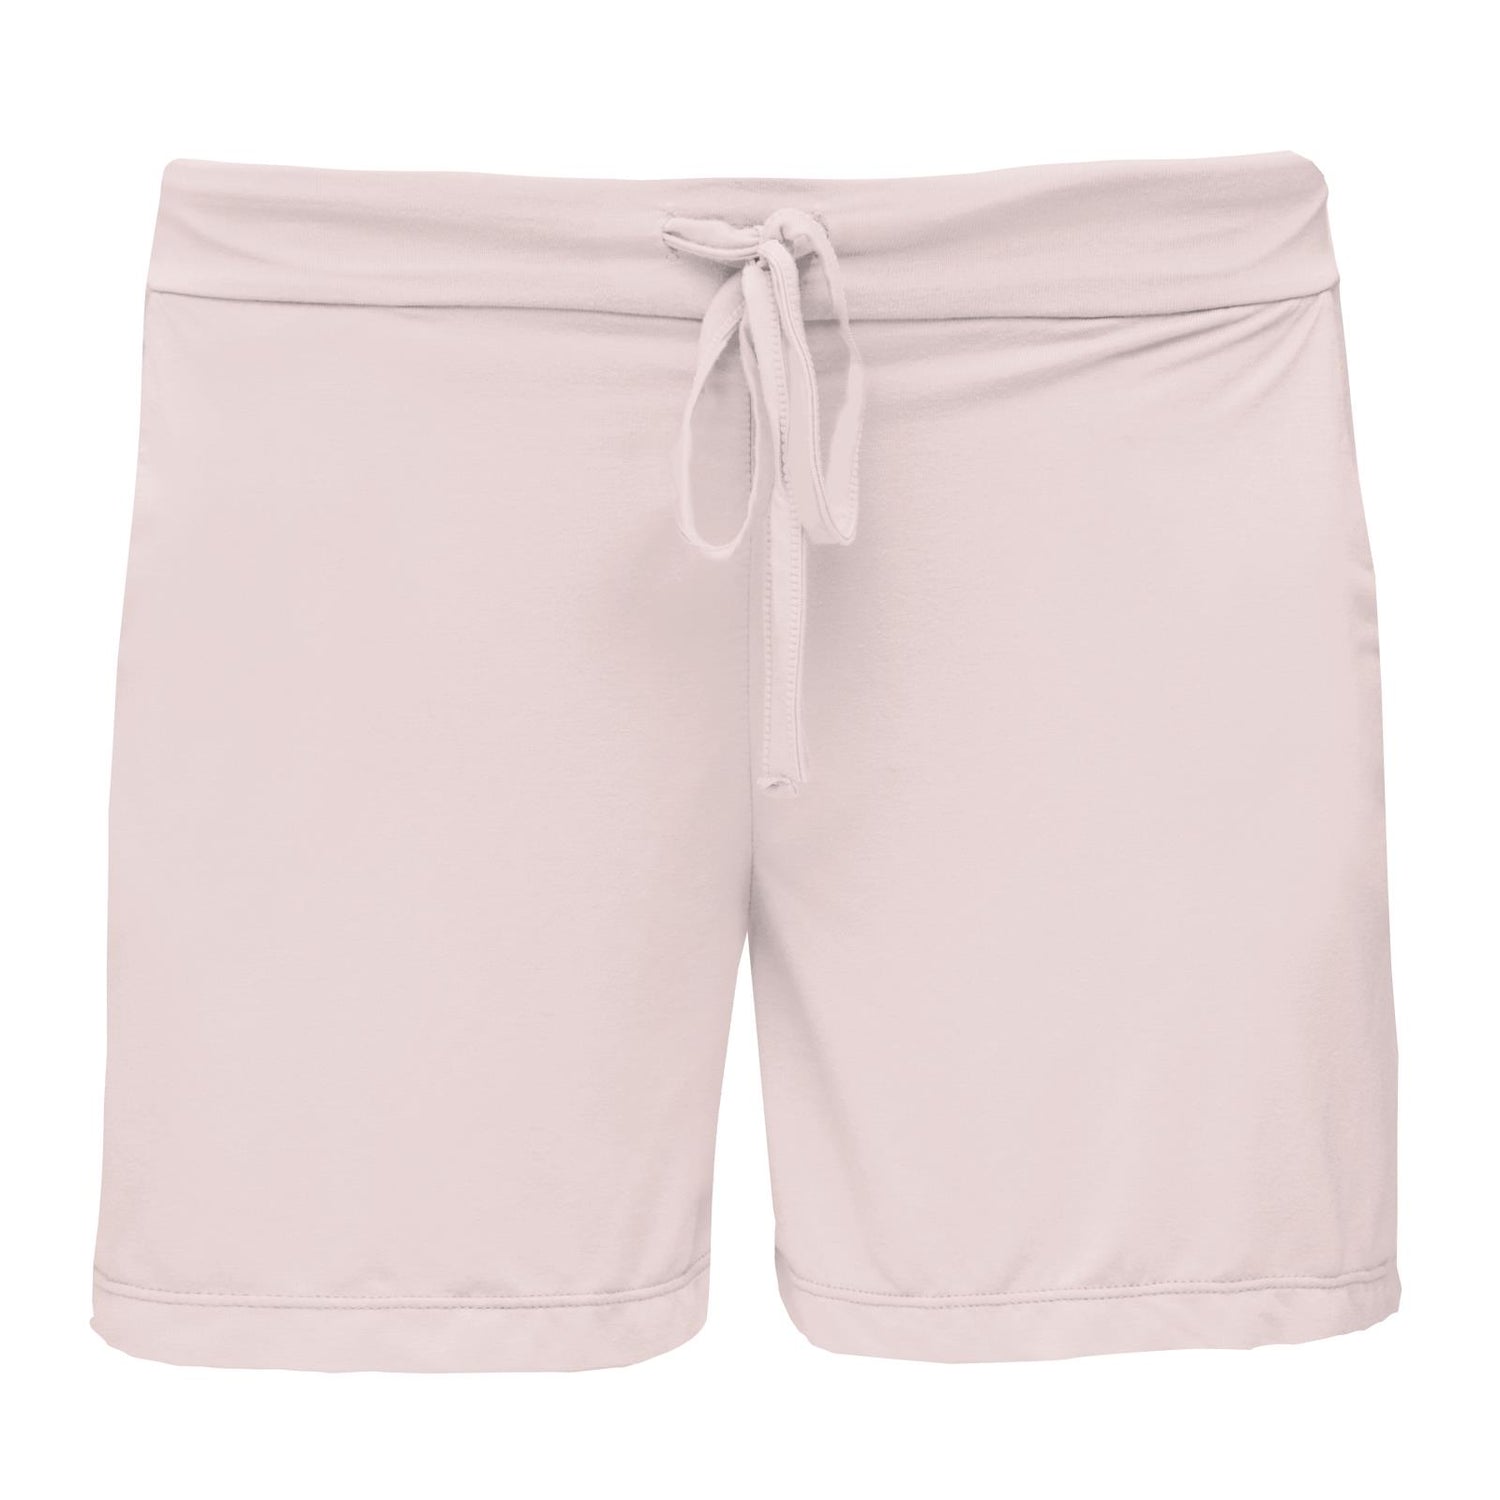 Women's Lounge Shorts in Macaroon